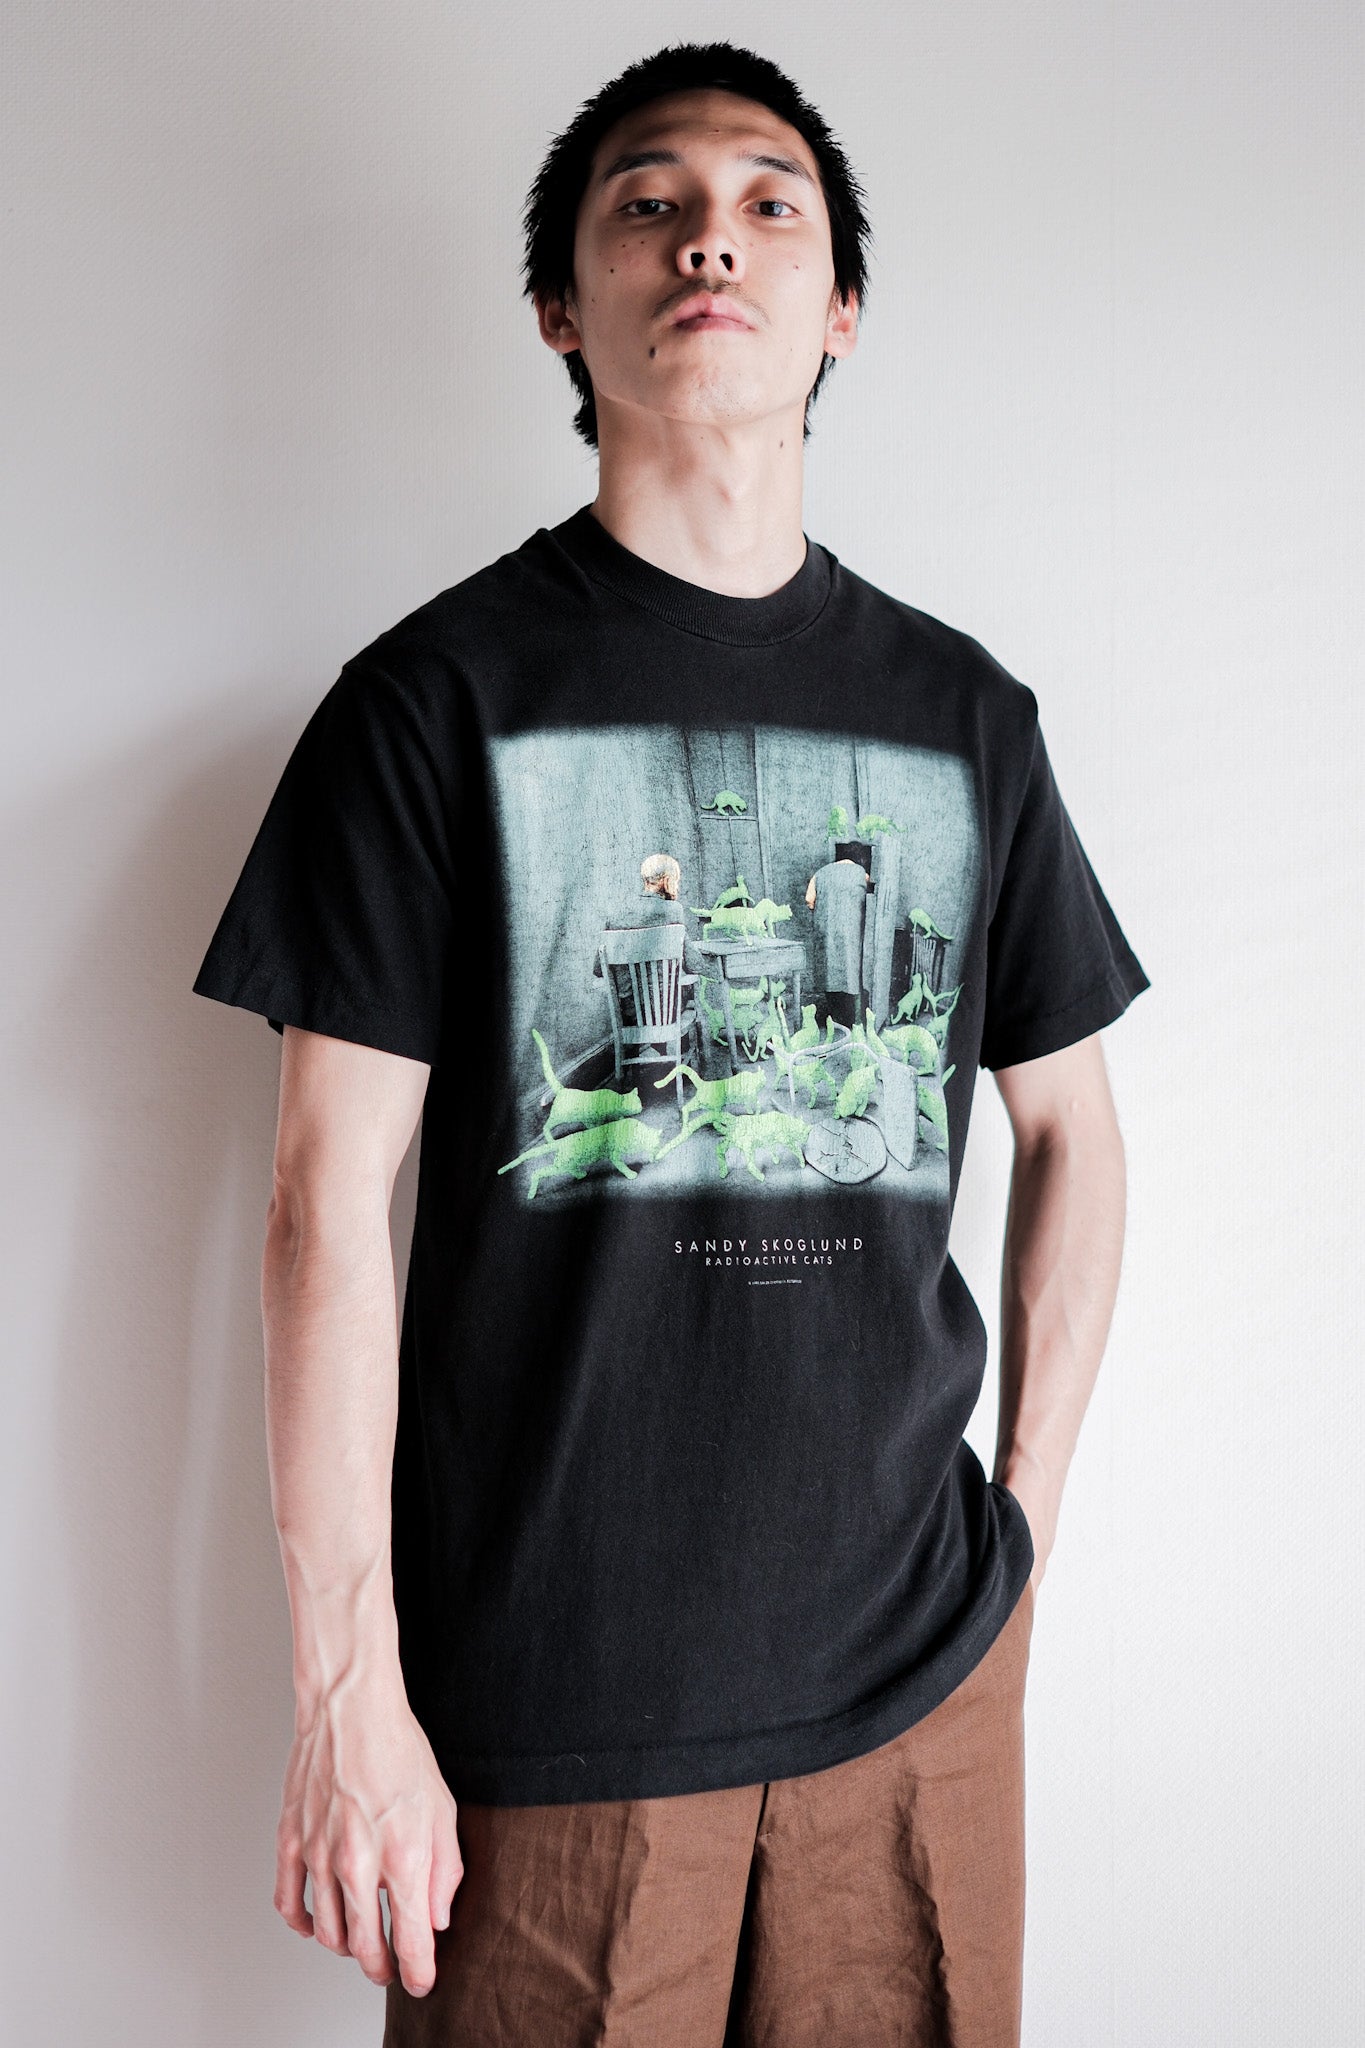 [~ 90's] Vintage Art Print T-shirt Size.M "Sandy Skoglund" "Radioactive Cats" "Made in U.S.A."